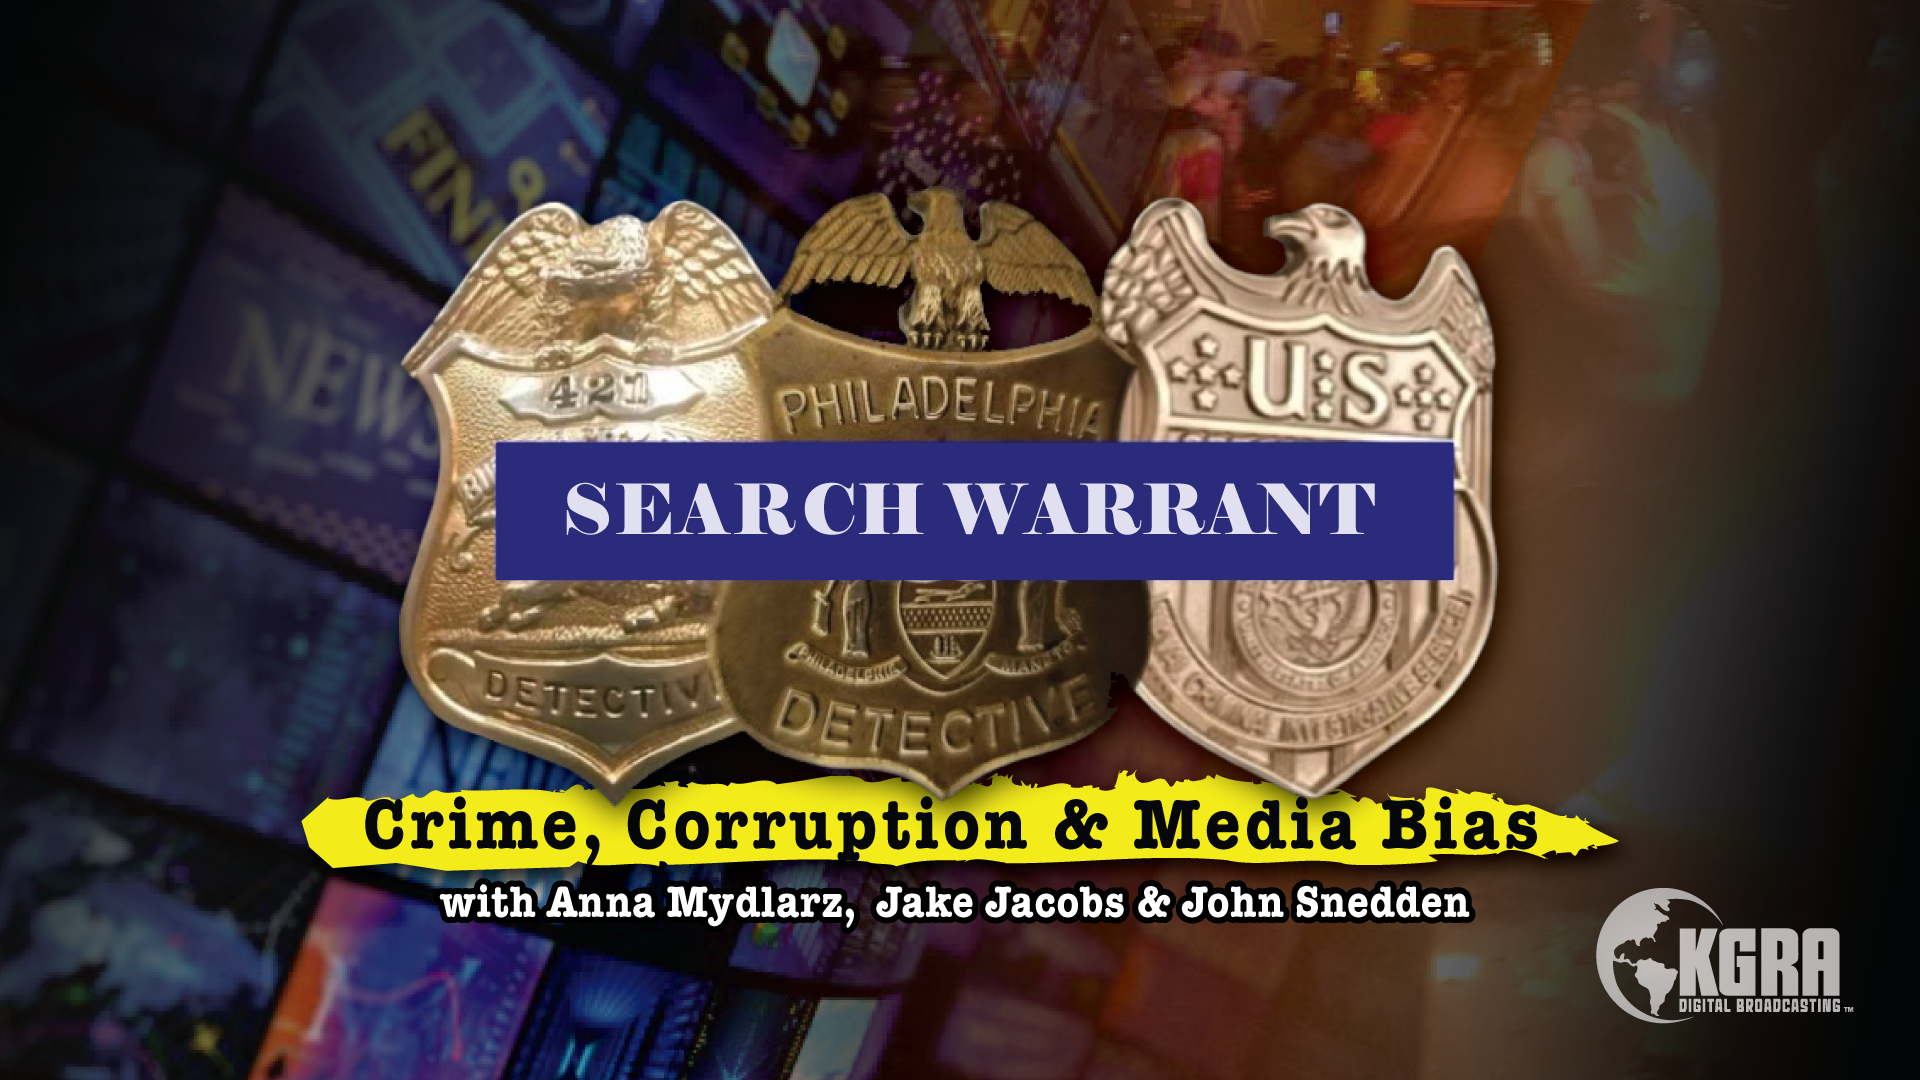 Search Warrant - KGRA Digital Broadcasting